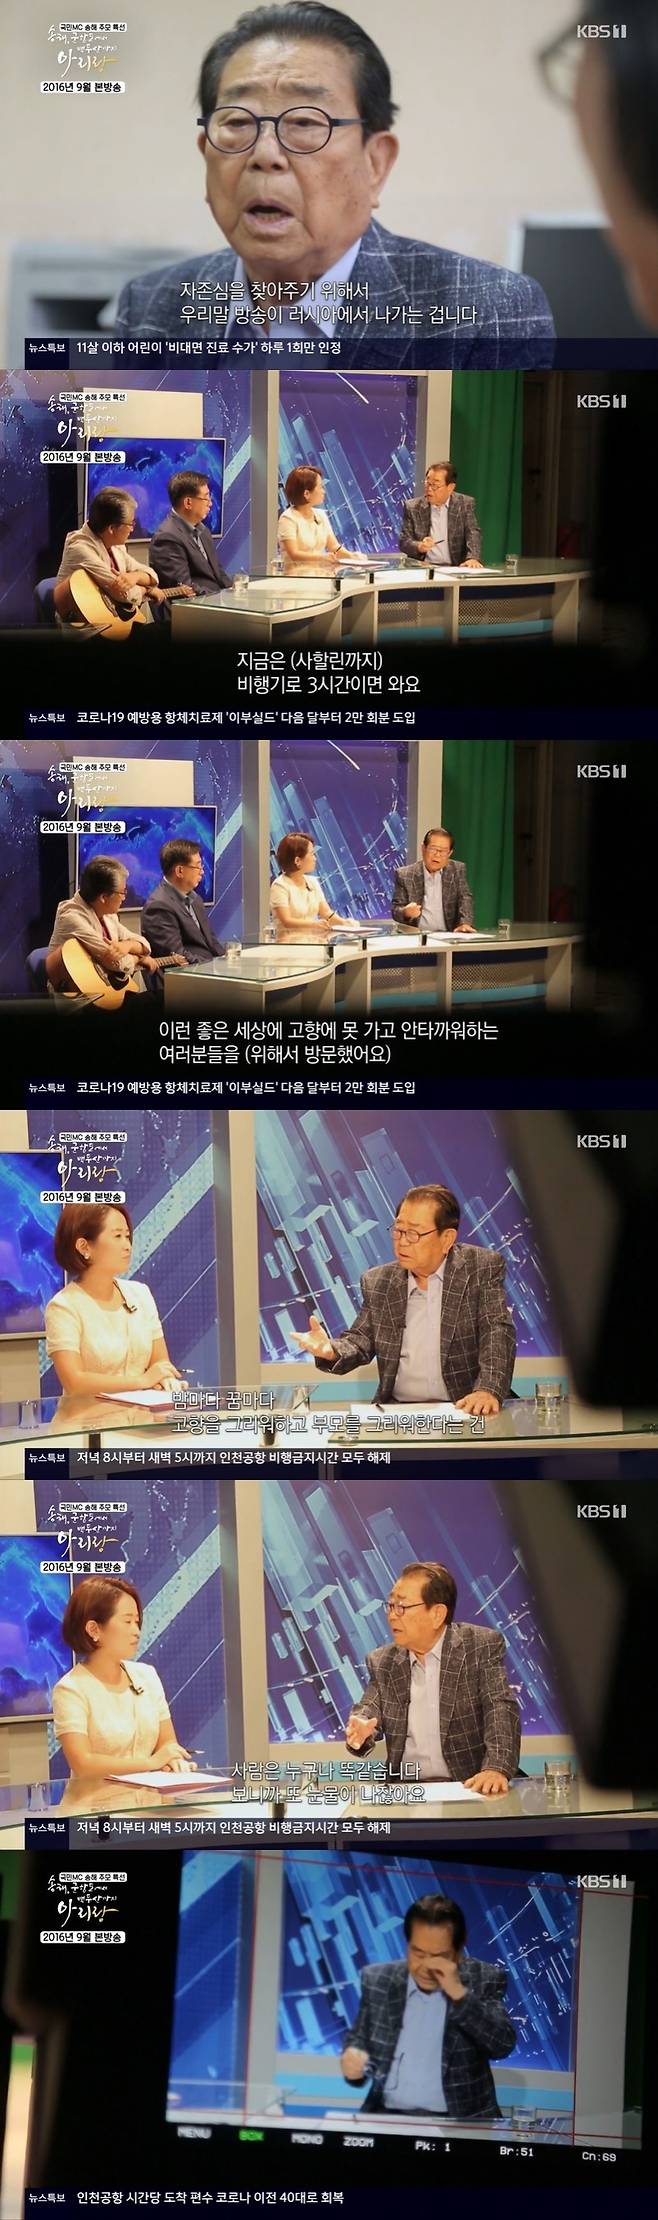 KBS 1TV '국민MC 송해 추모특선 KBS 걸작 다큐멘터리-송해, 군함도' 캡처 © 뉴스1